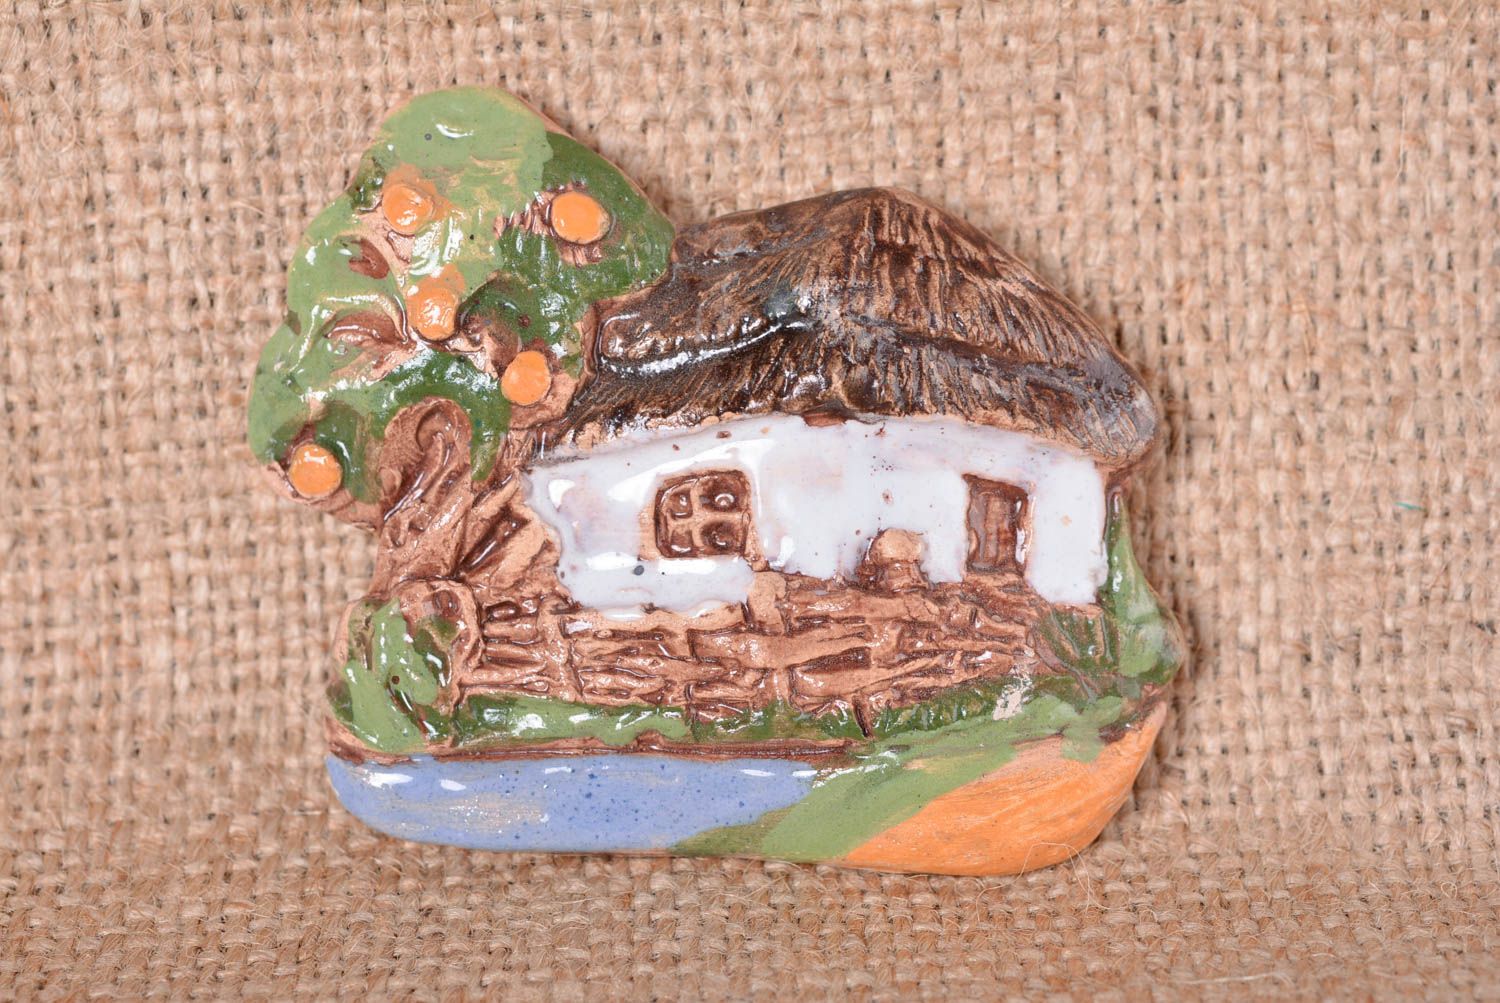 Imán de nevera hecho a mano de cerámica elemento decorativo regalo original foto 1